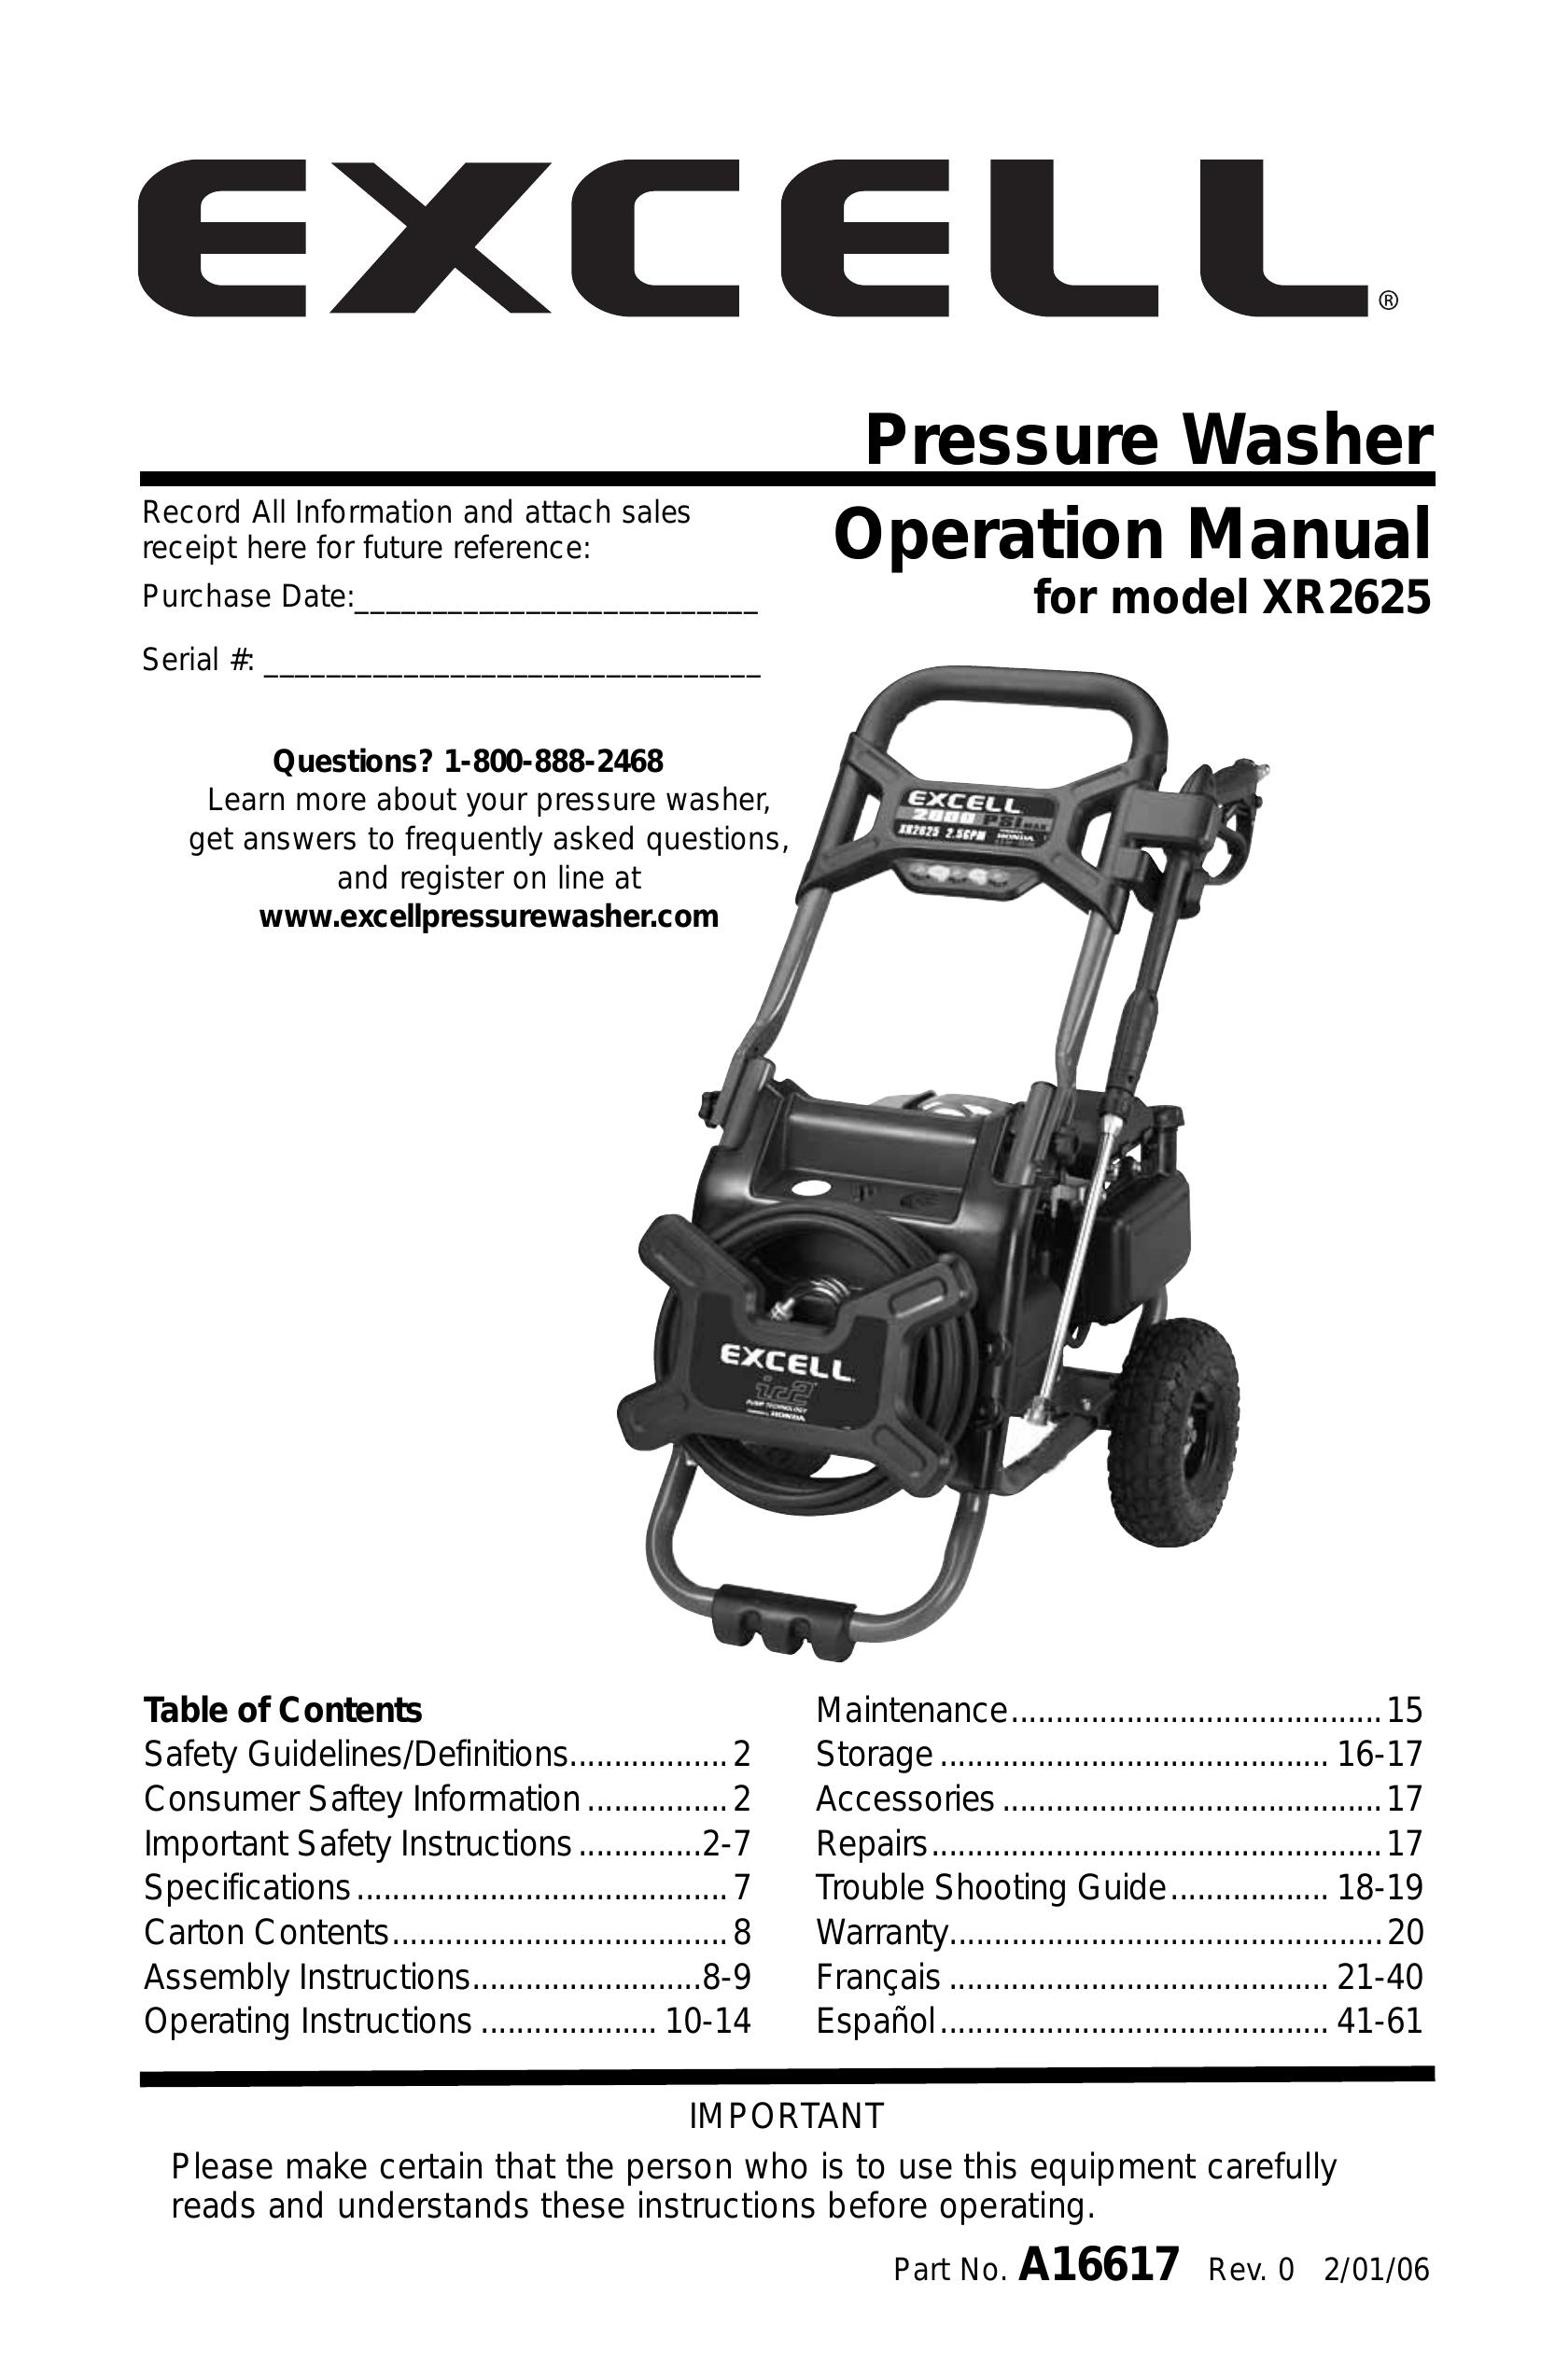 DeVillbiss Air Power Company XR2625 Pressure Washer User Manual